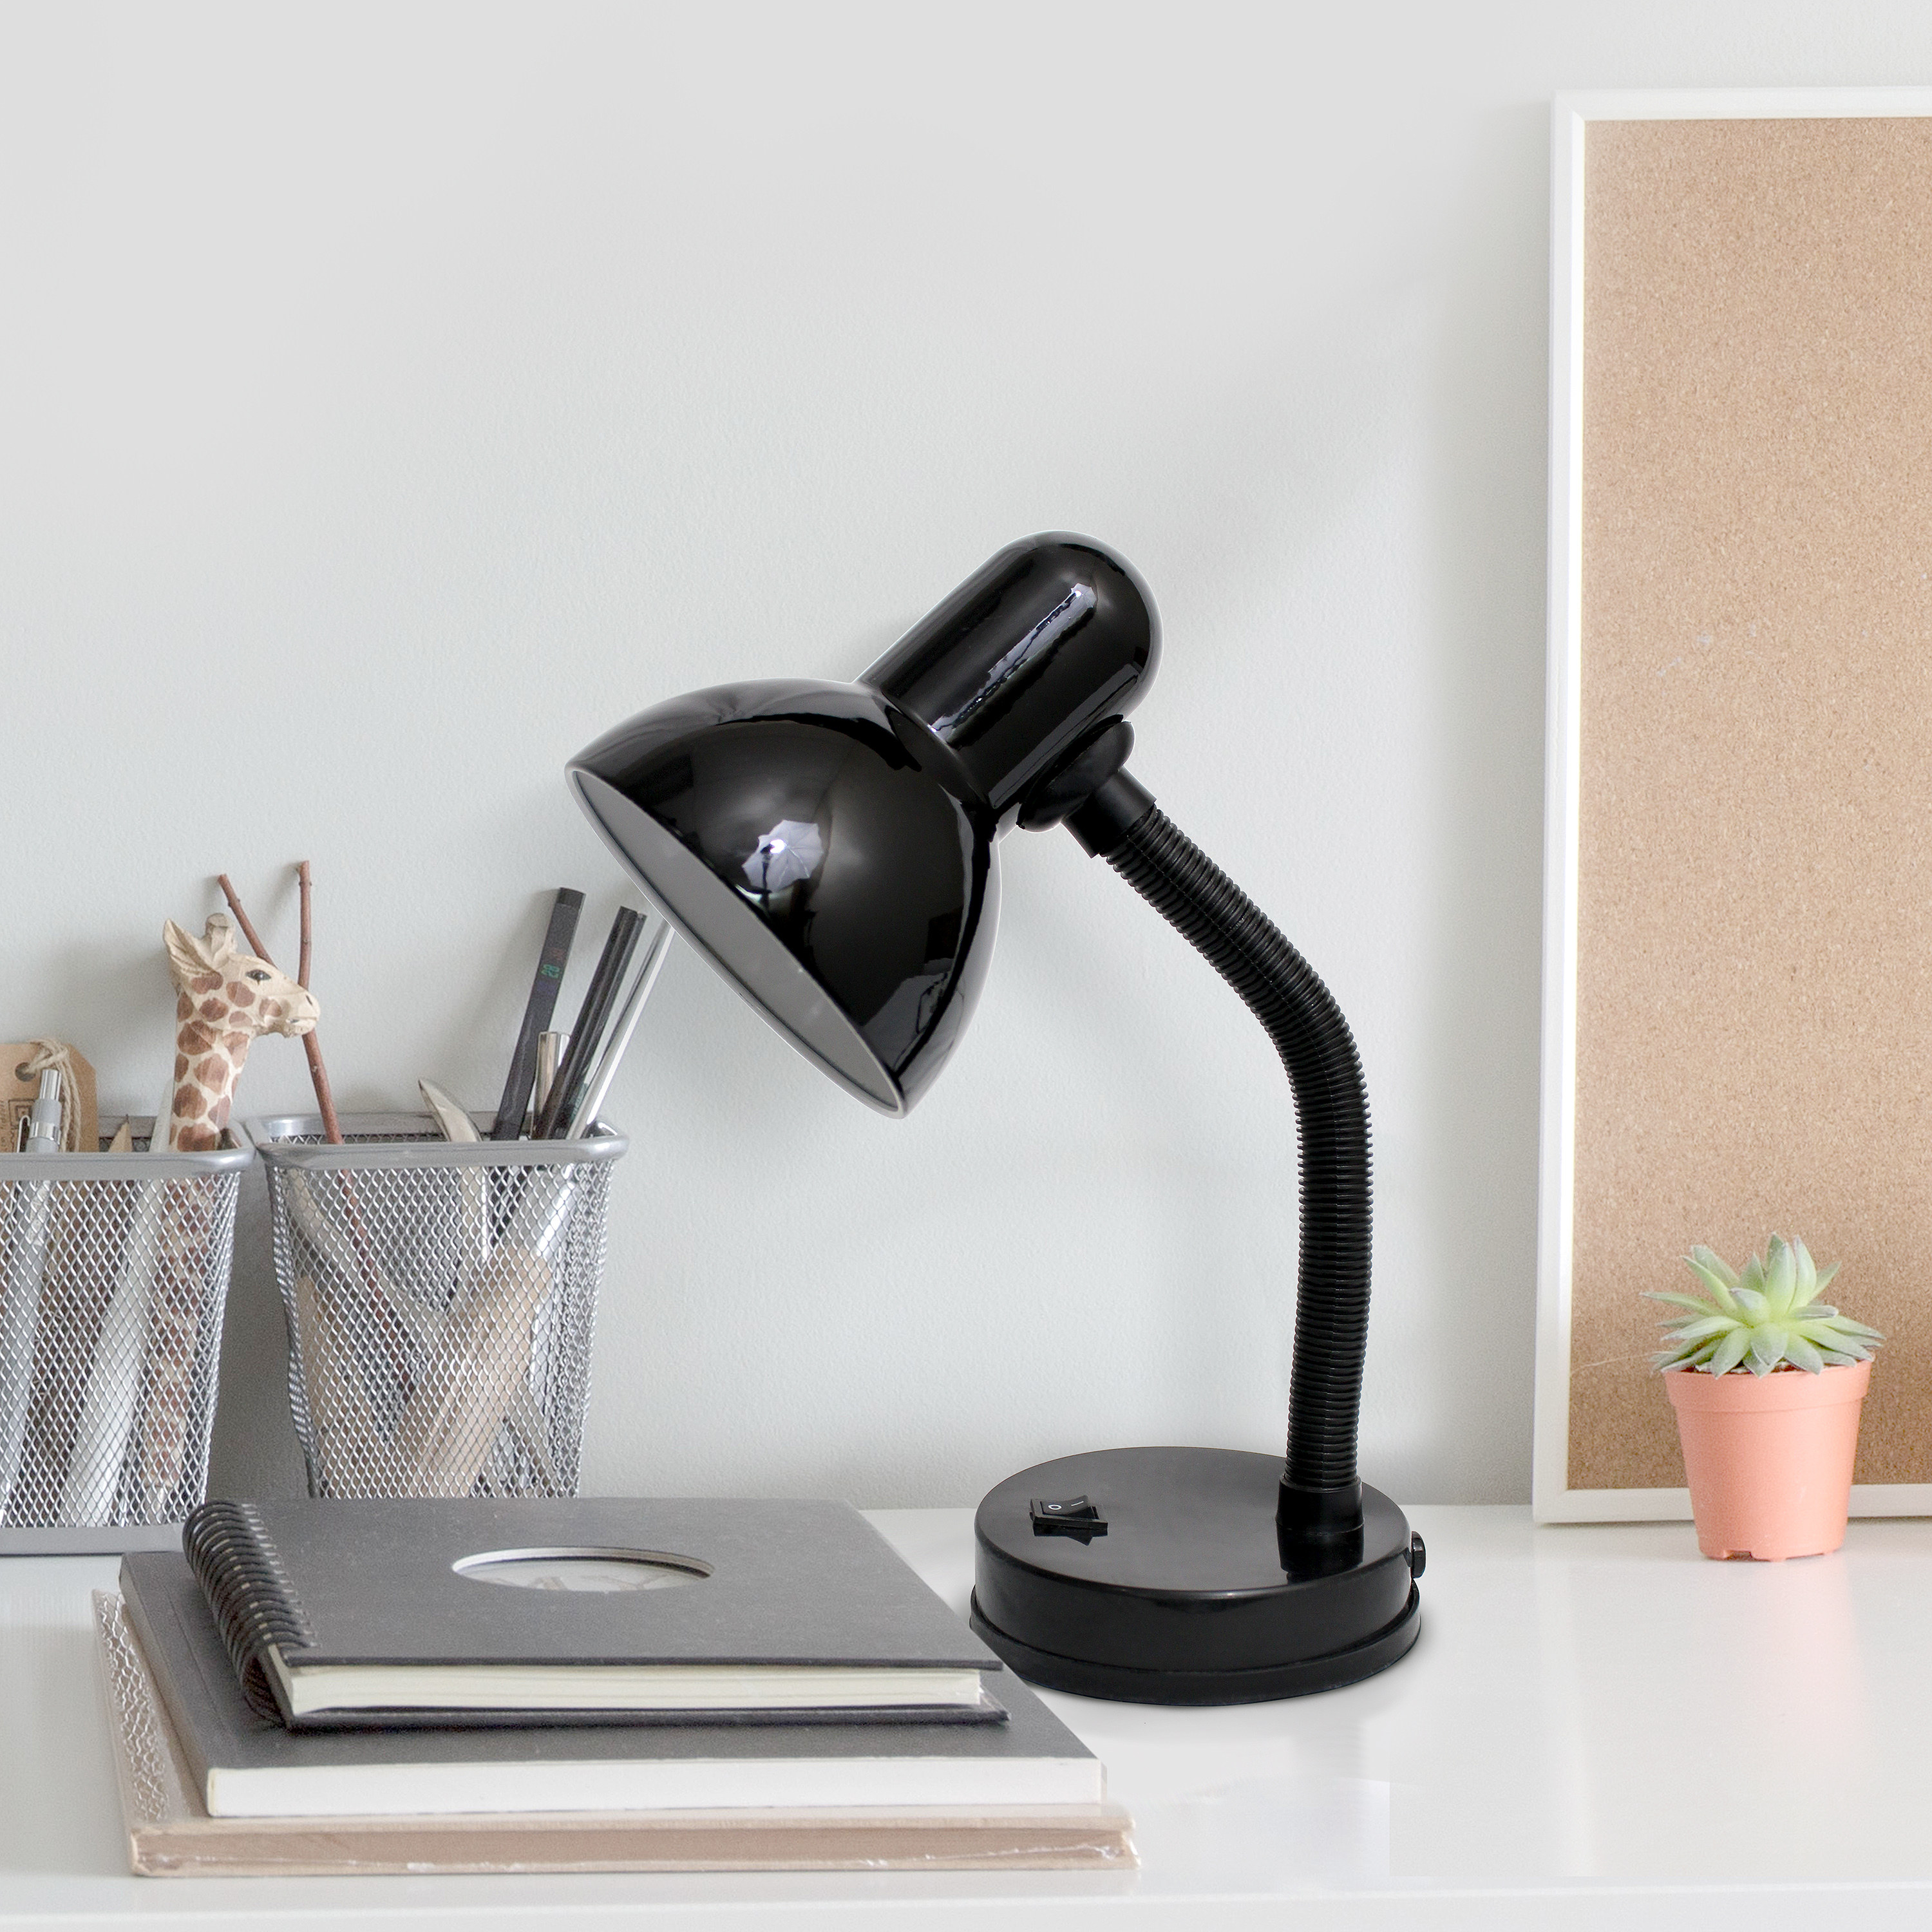 Simple Designs 14.25" Basic Metal Desk Lamp with Flexible Hose Neck, Black - image 5 of 13